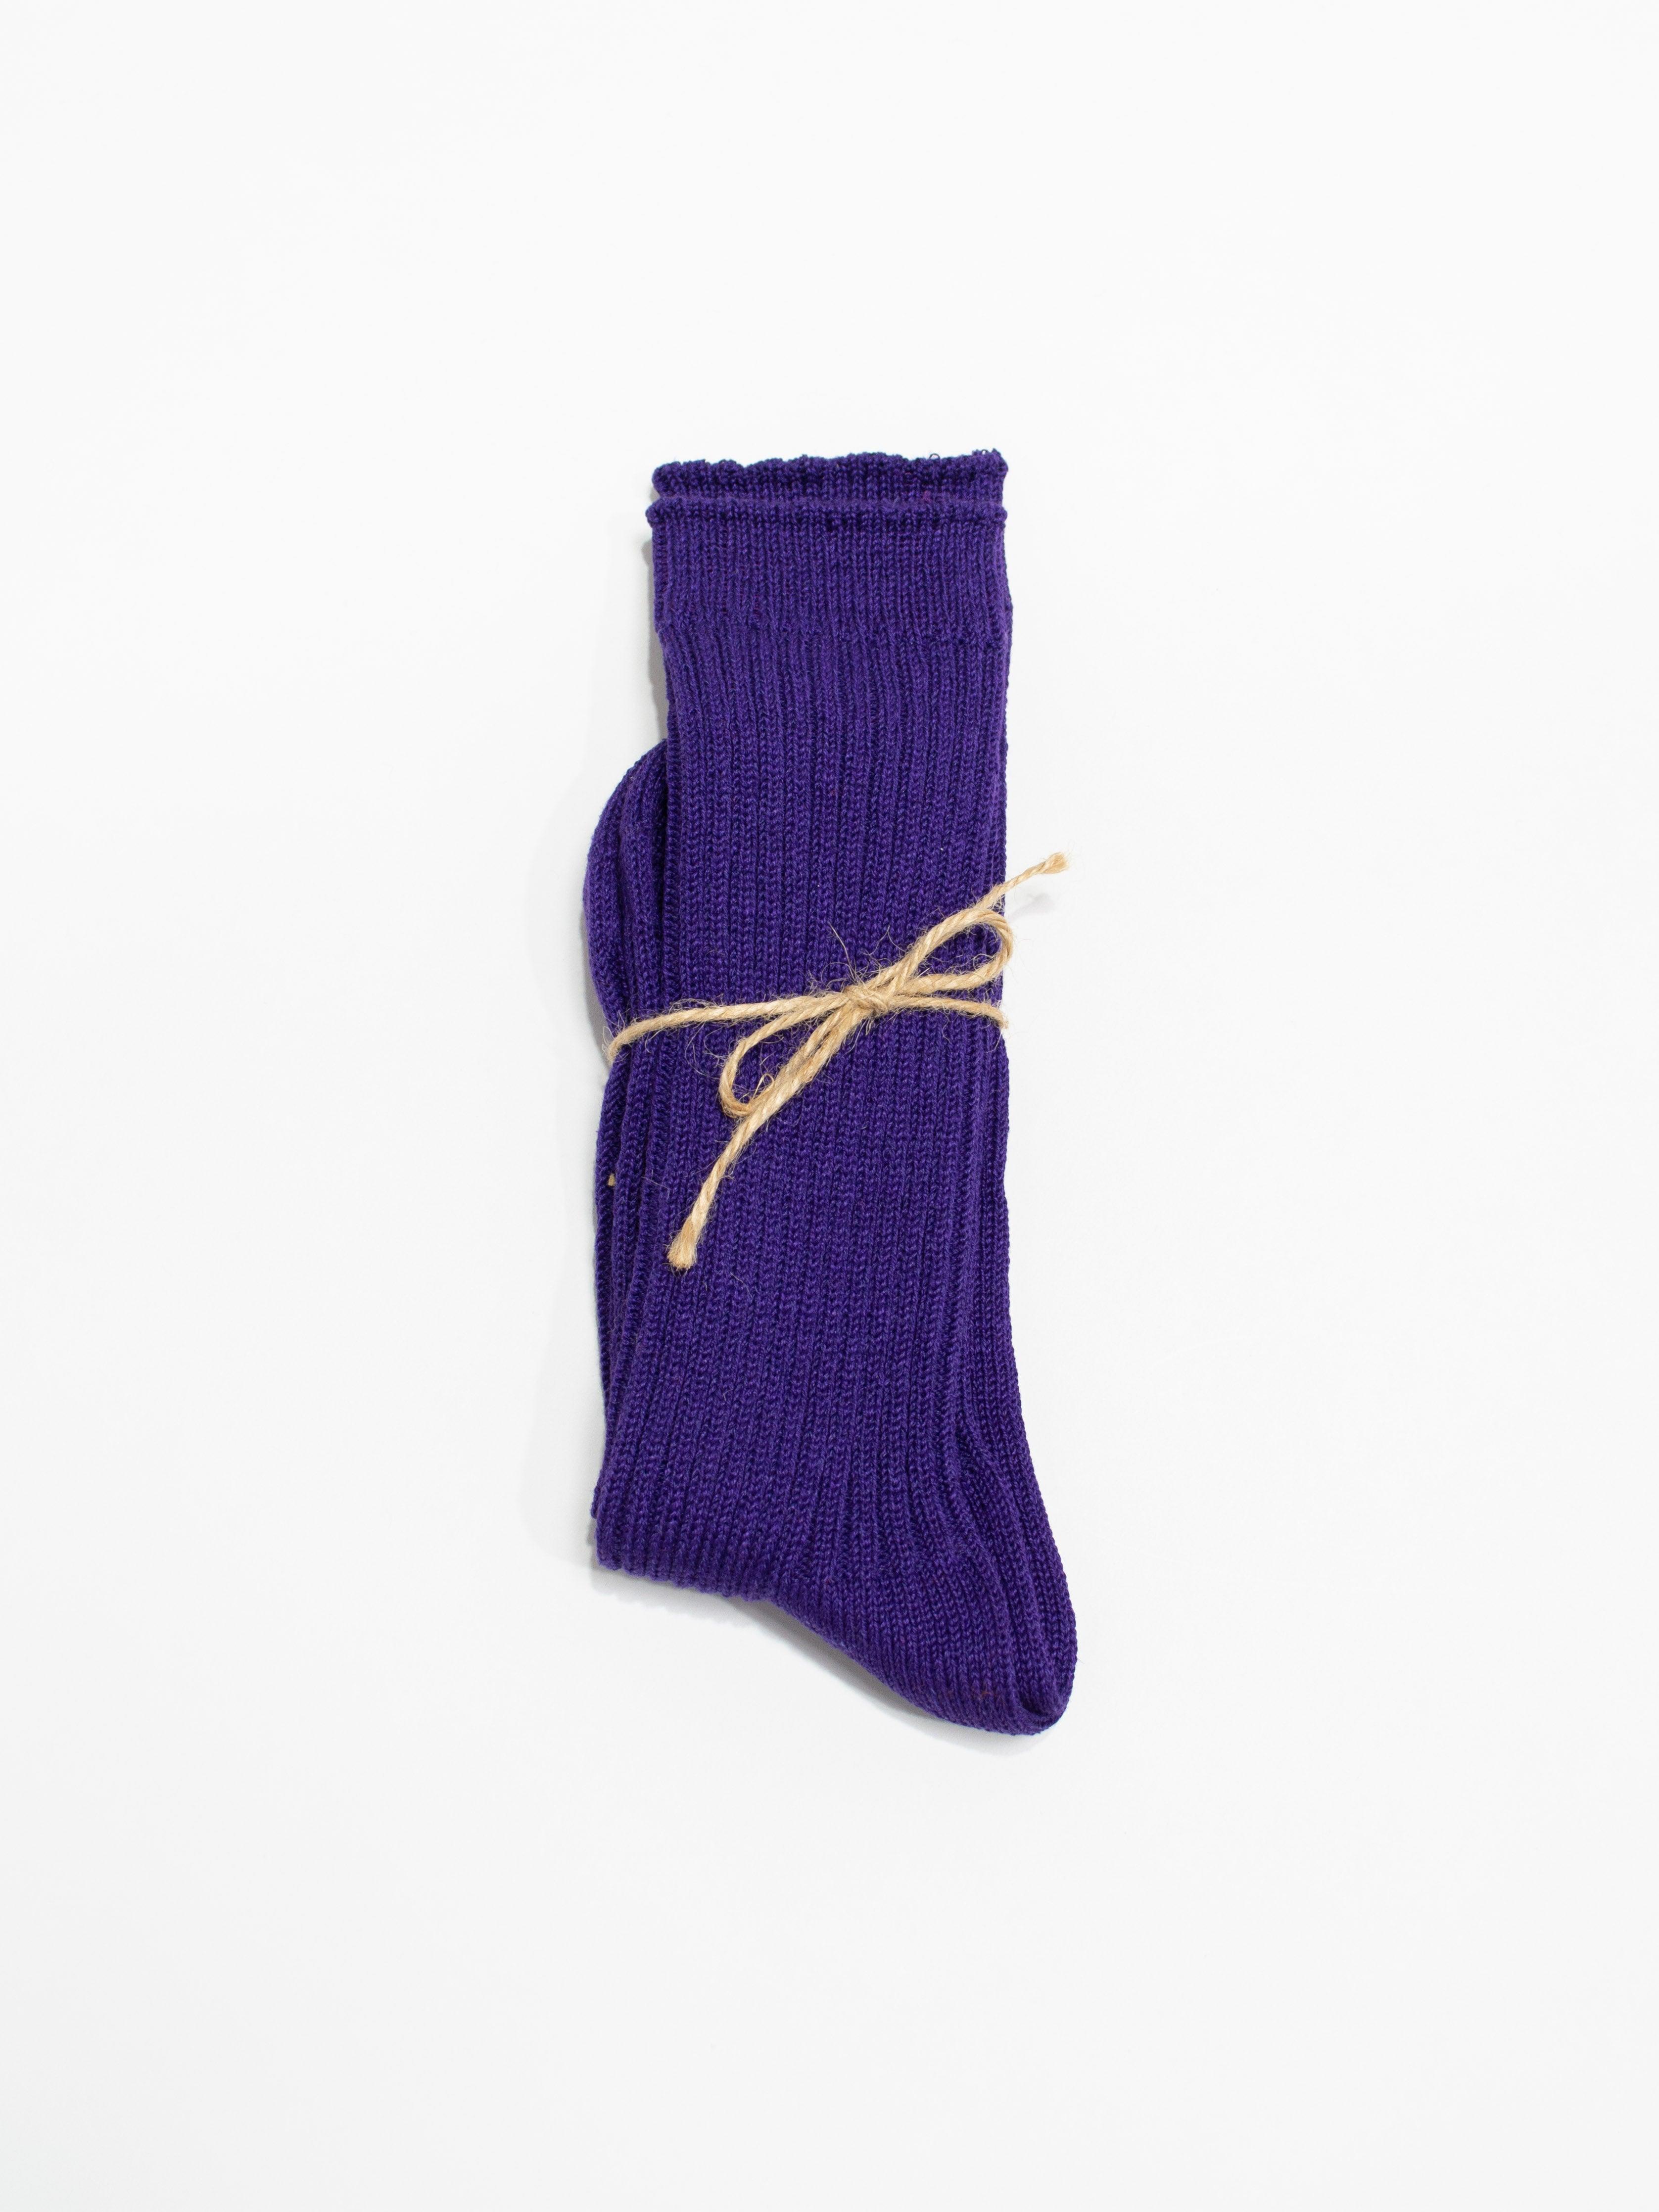 Namu Shop - Ichi Antiquites Linen Color Rib Socks - Smoke Pink, Orange, Purple